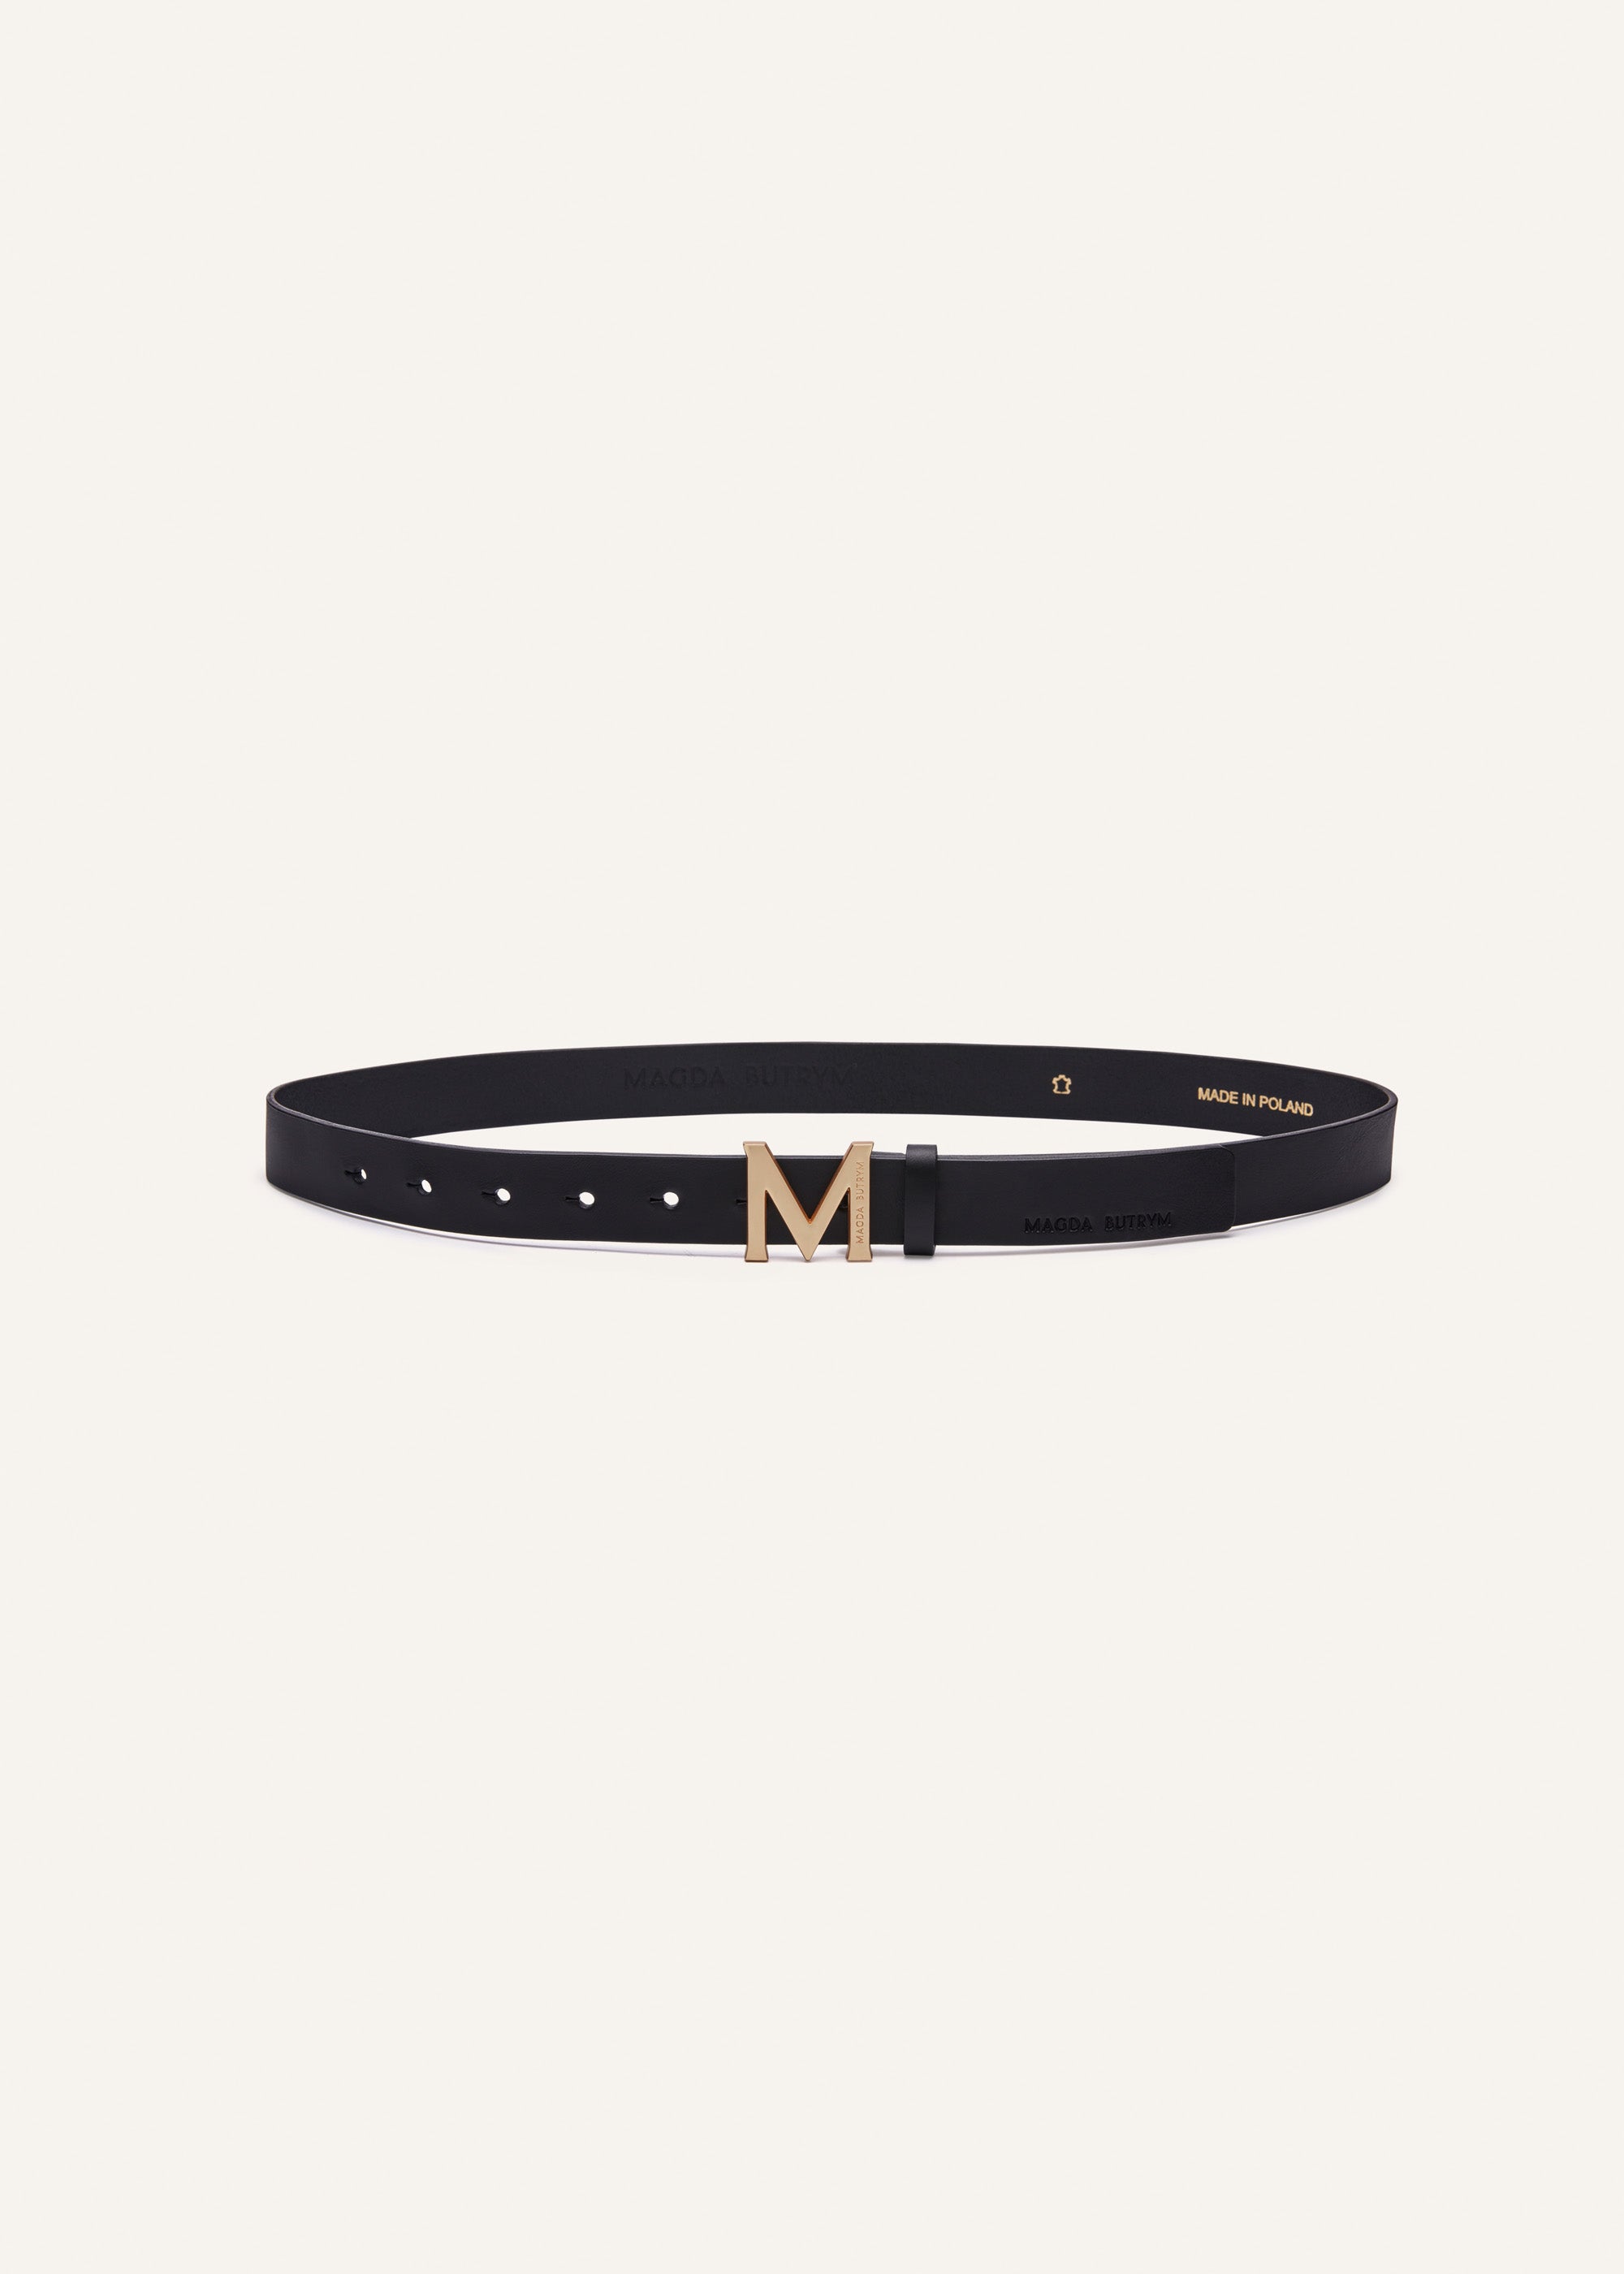 M logo belt in Butrym | Magda black leather